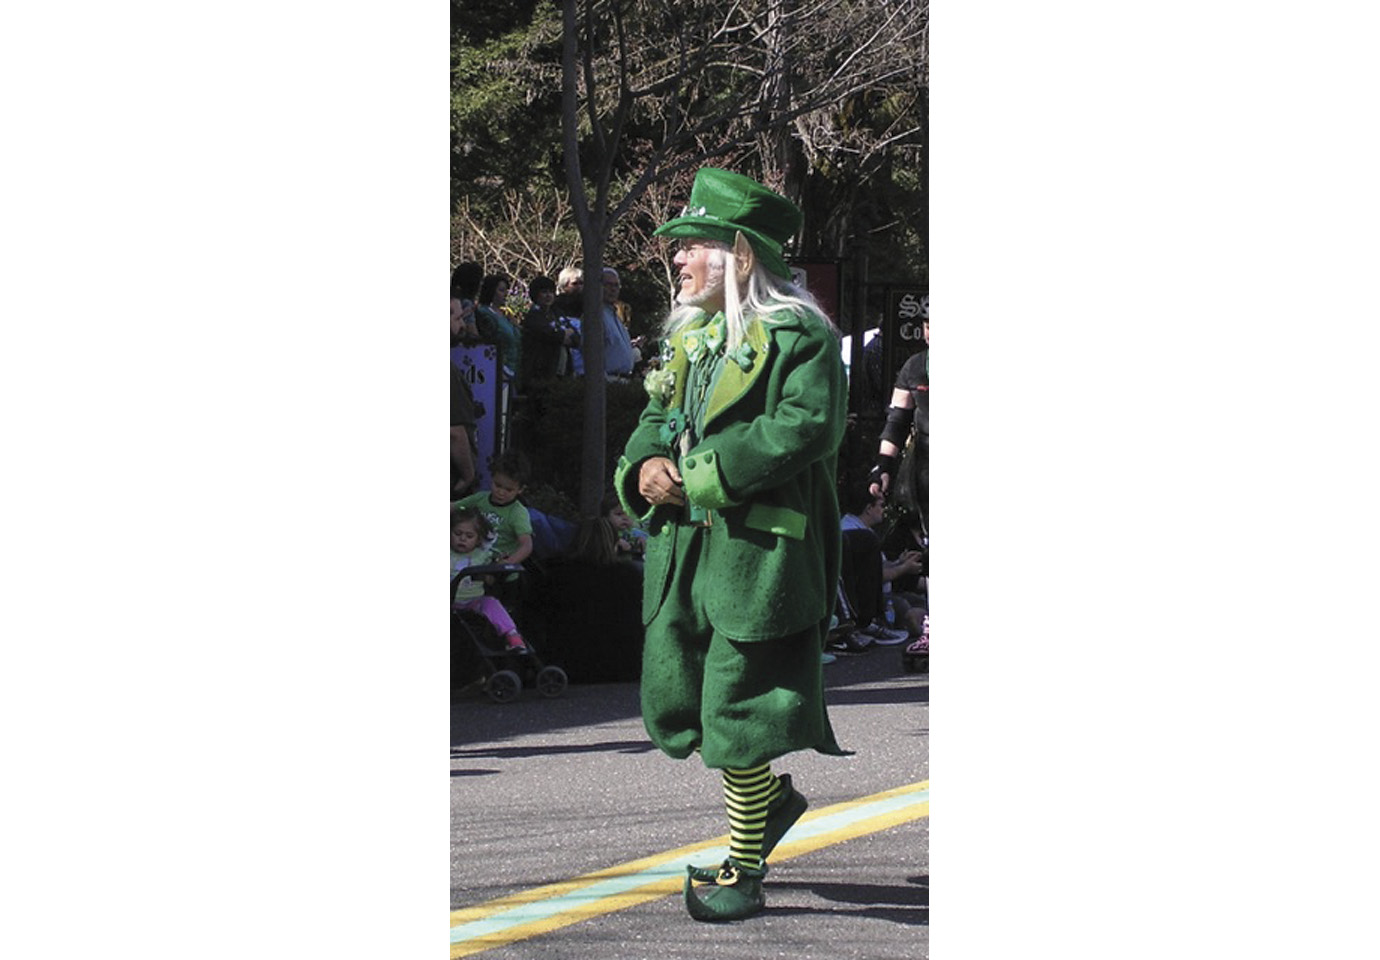 Every year, Murphys hosts an Irish Day Parade.